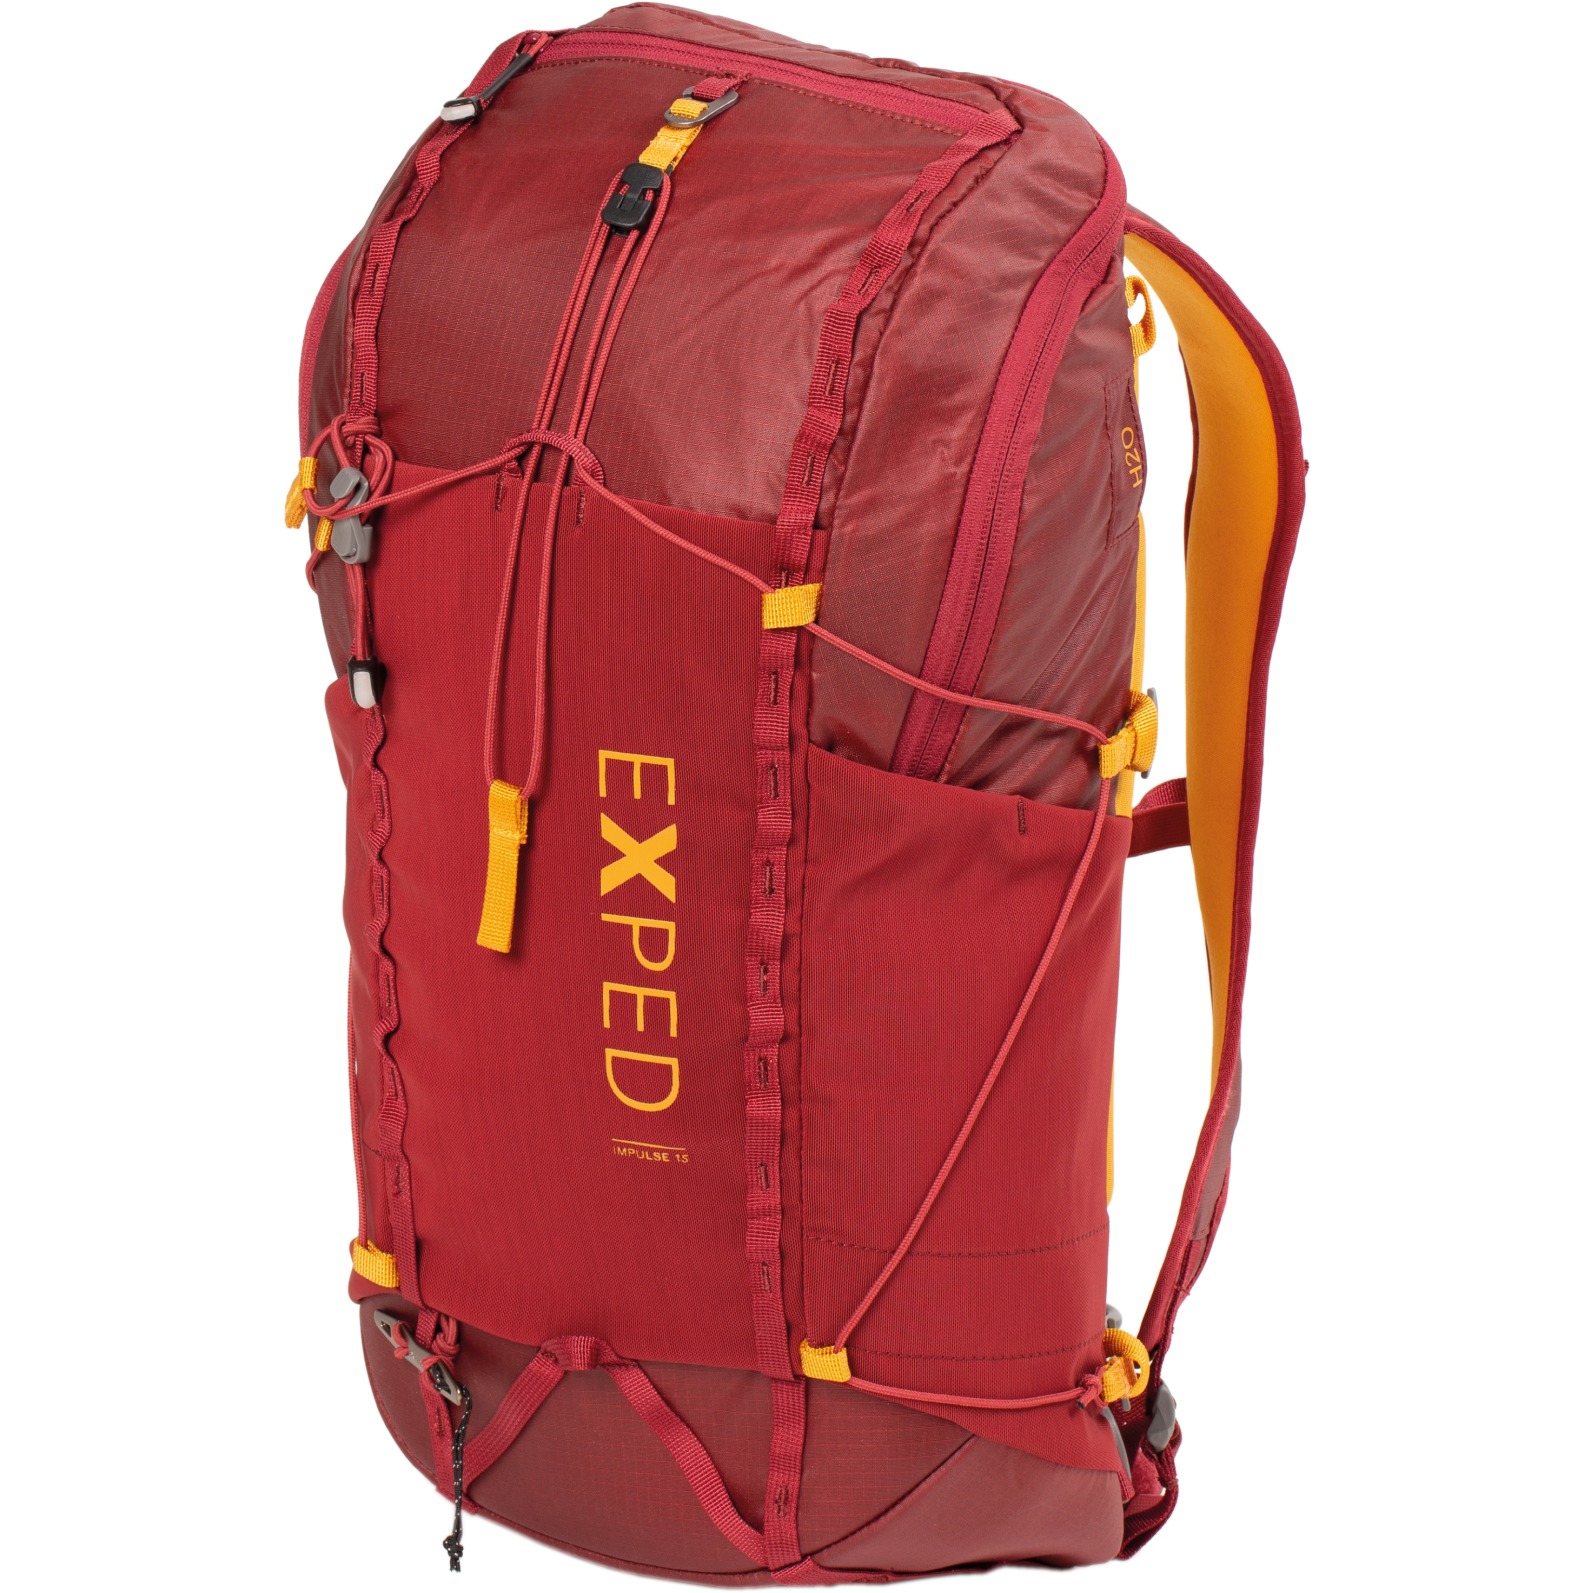 Image of Exped Impulse 15 Backpack - burgundy